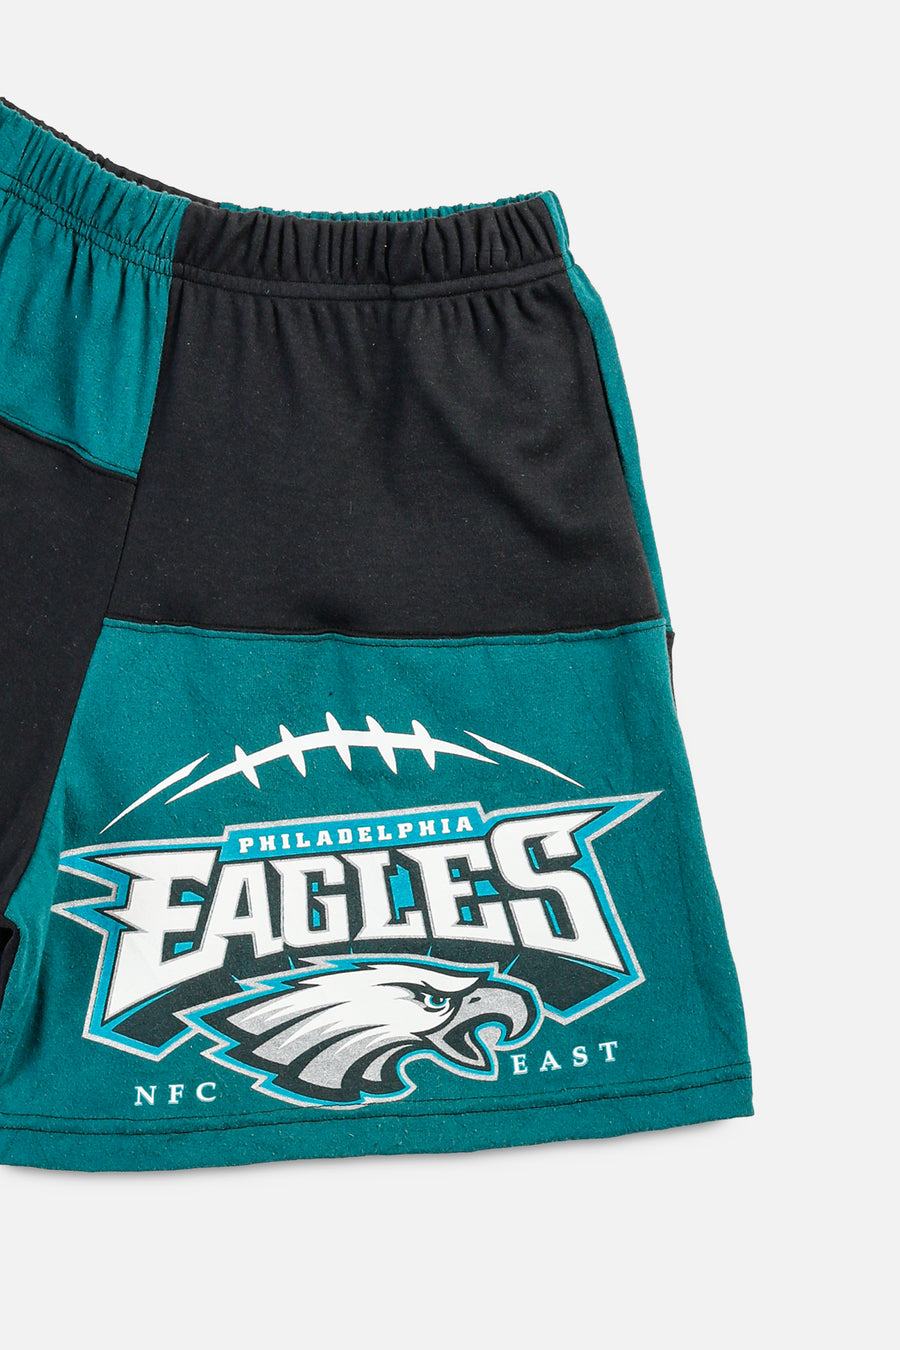 Unisex Rework Philadelphia Eagles NFL Patchwork Tee Shorts - M